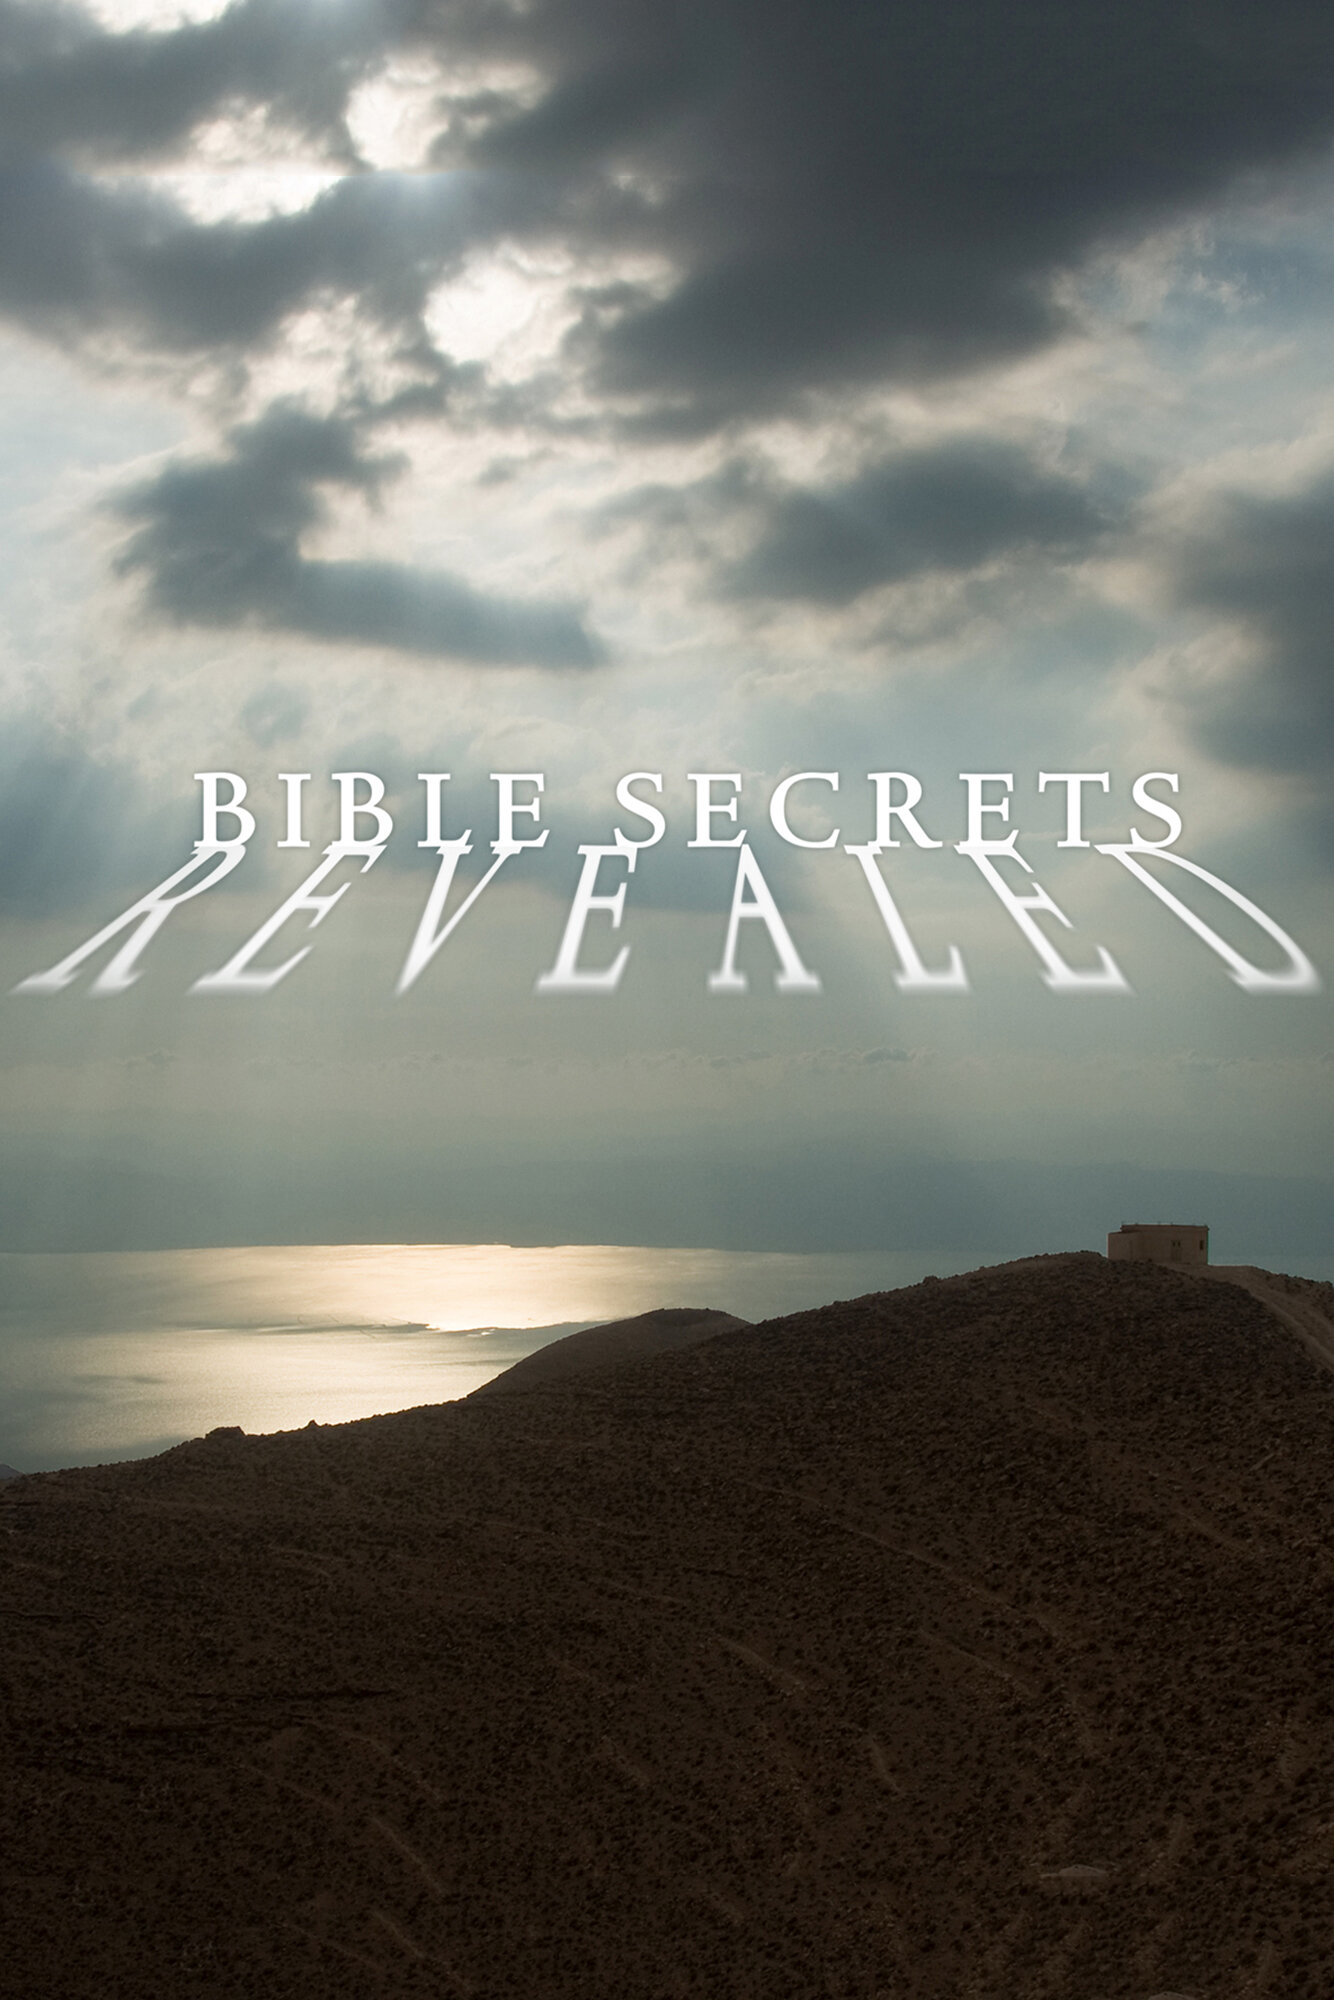 Bible Secrets Revealed ne zaman